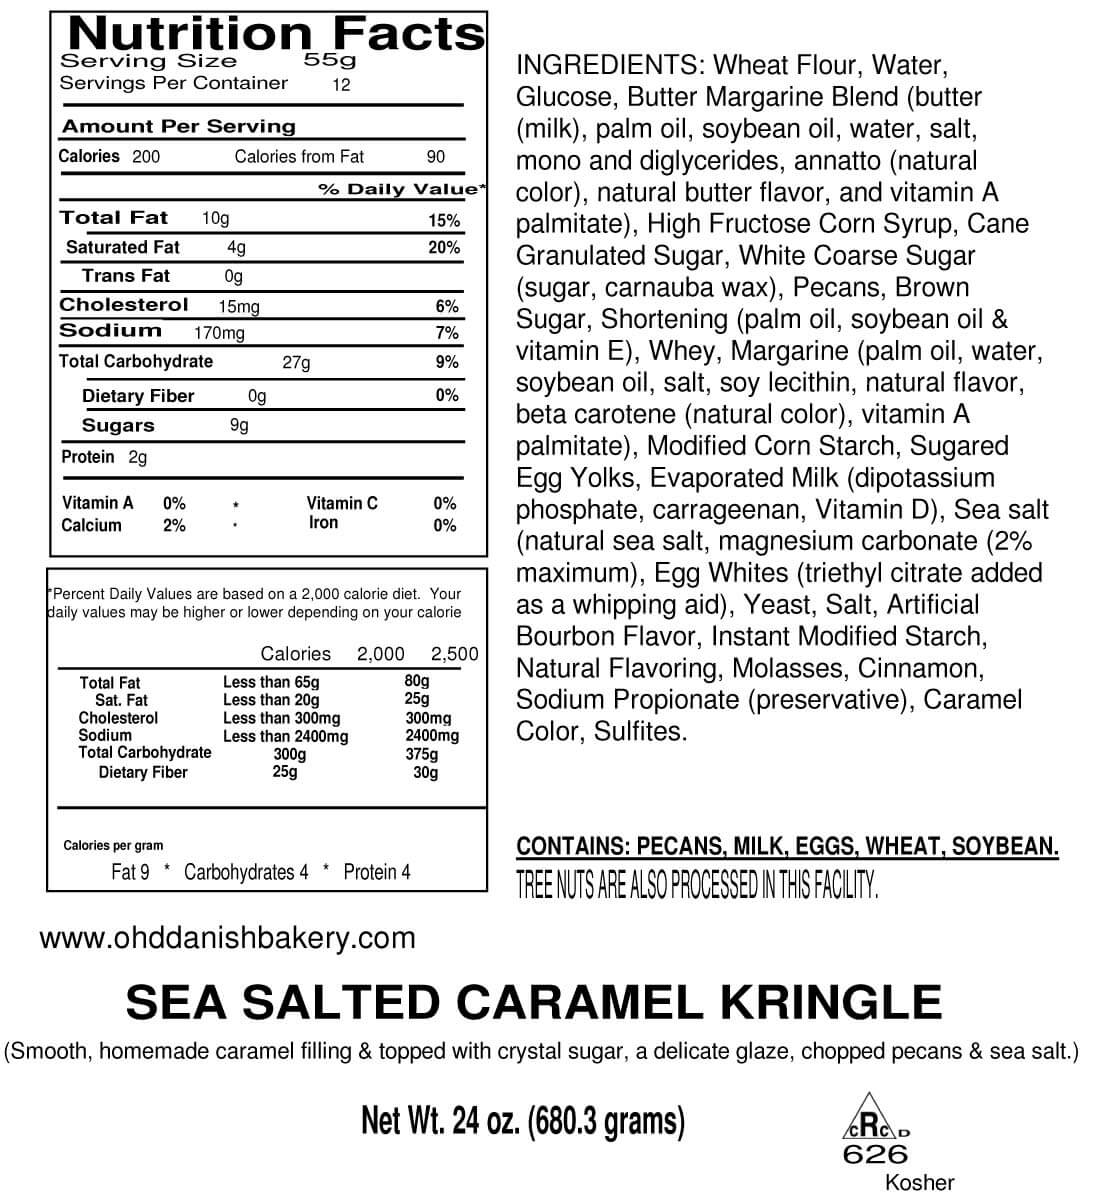 Nutritional Label for Sea Salted Caramel Kringle